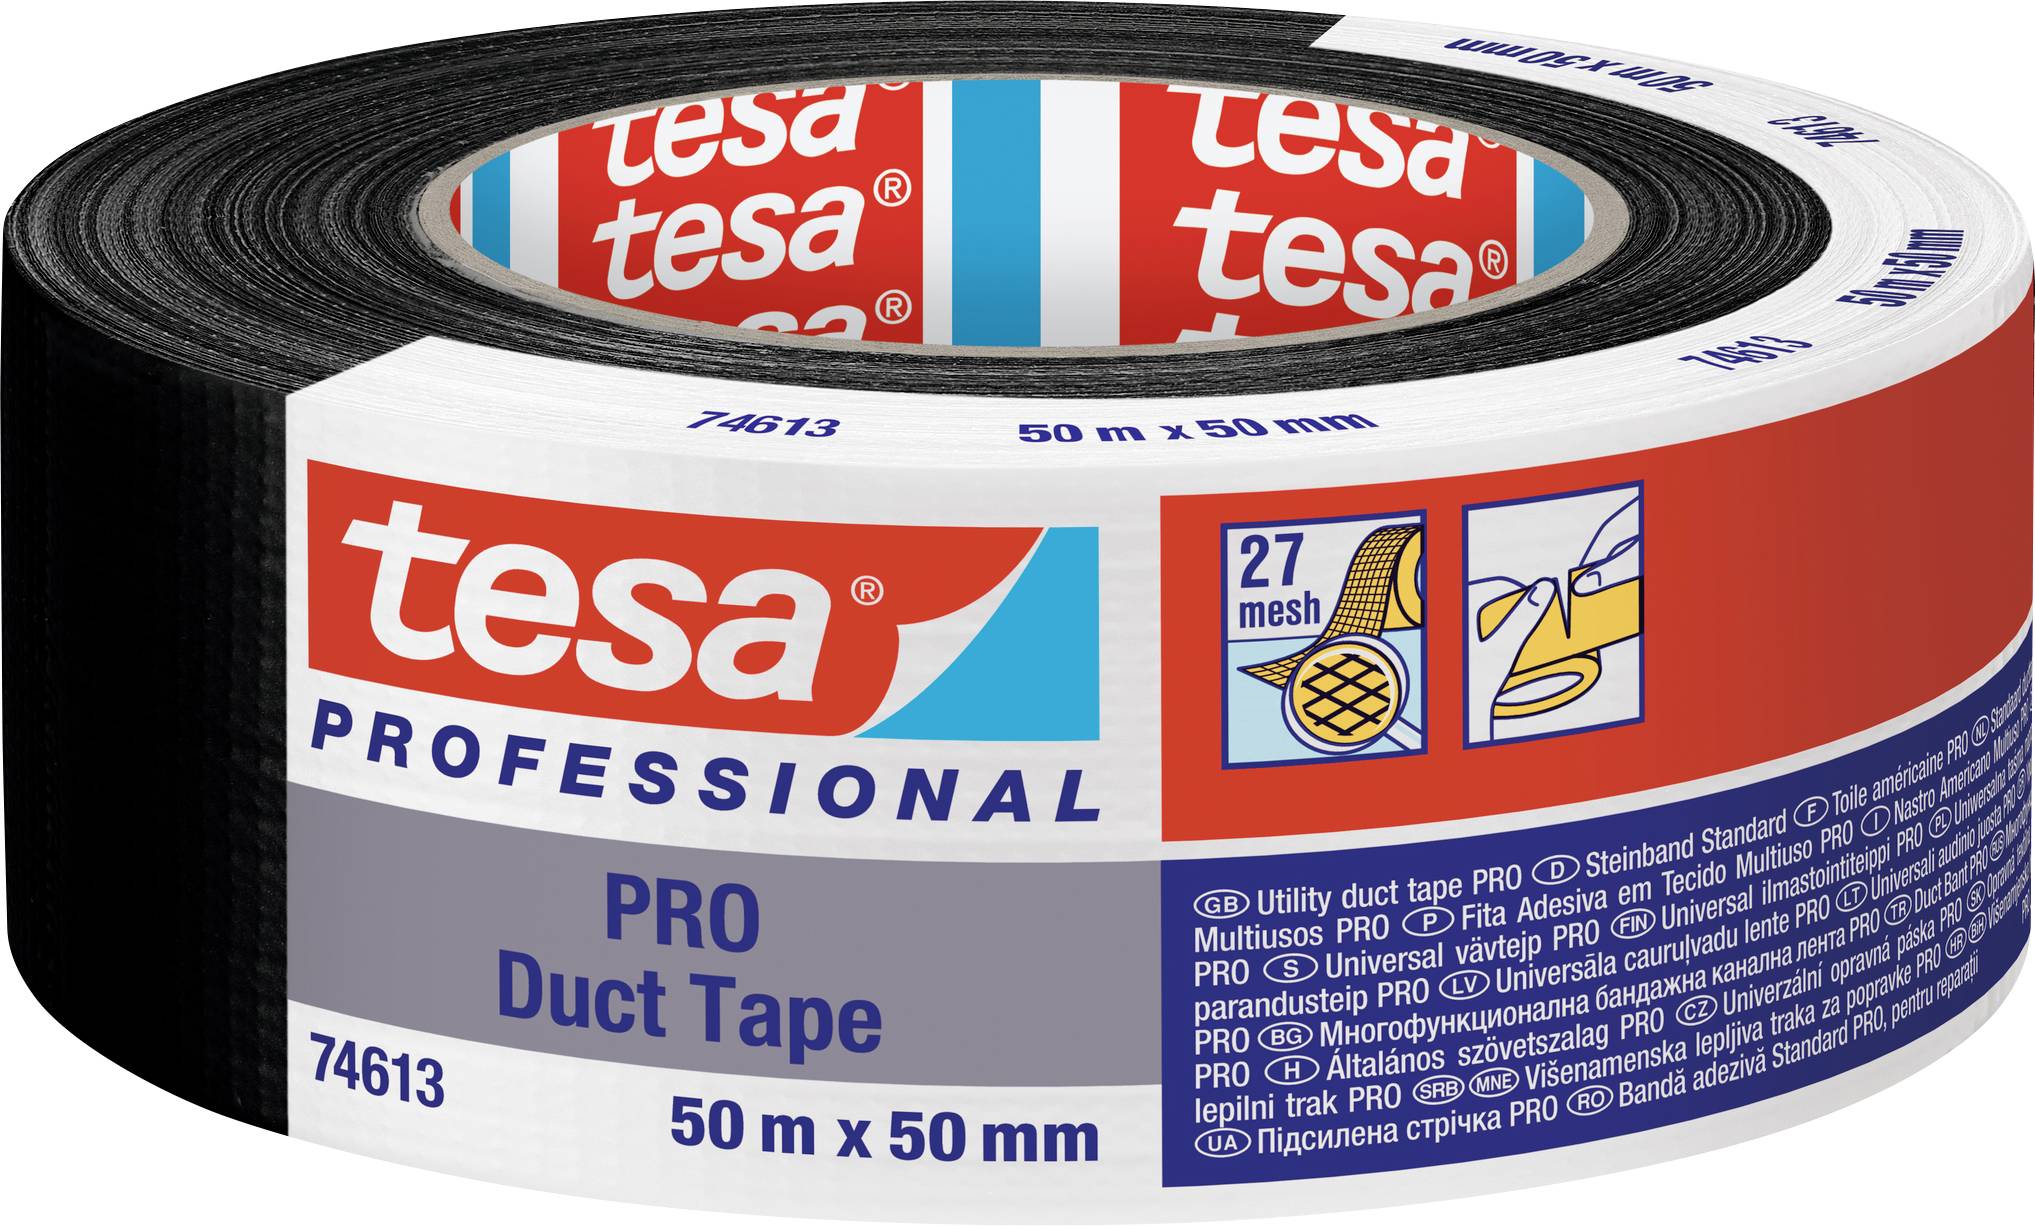 tesa® Photo Tape - tesa